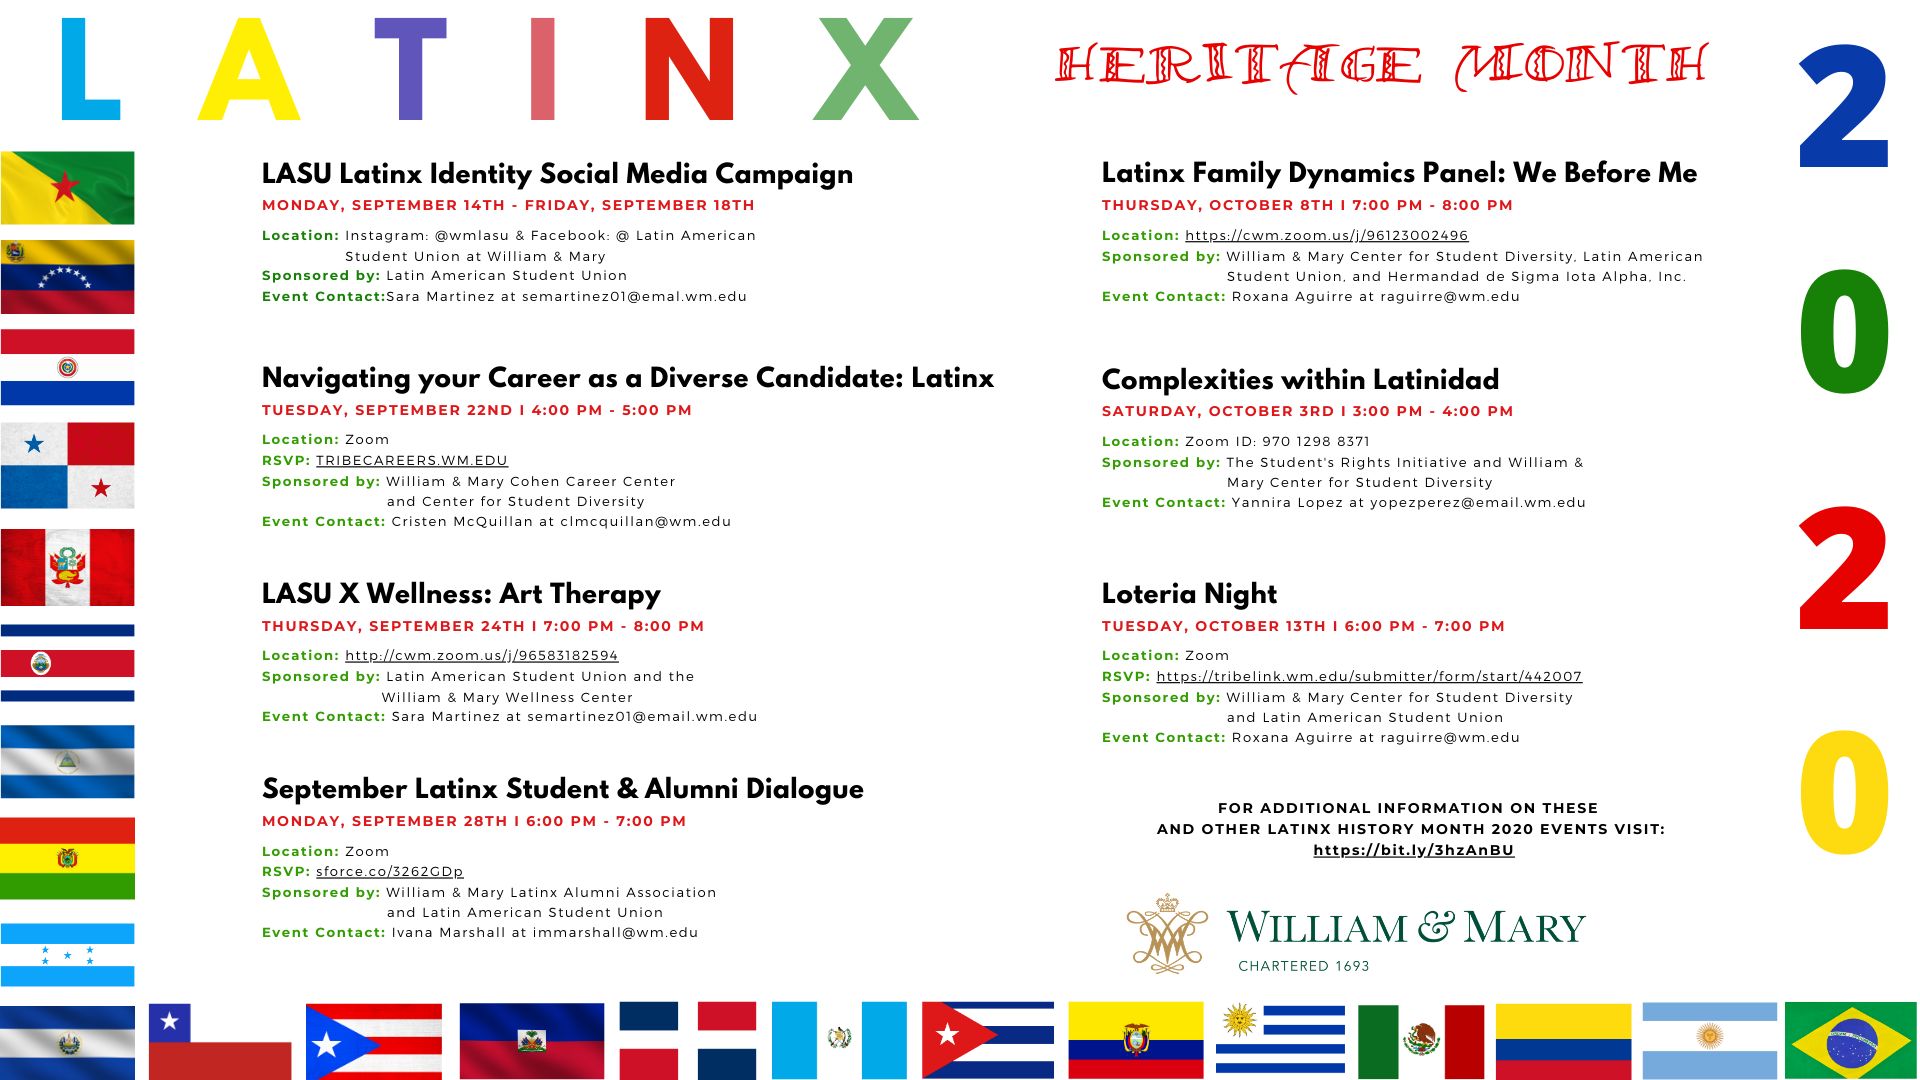 latinx-heritage-month-2020---desktop.jpg